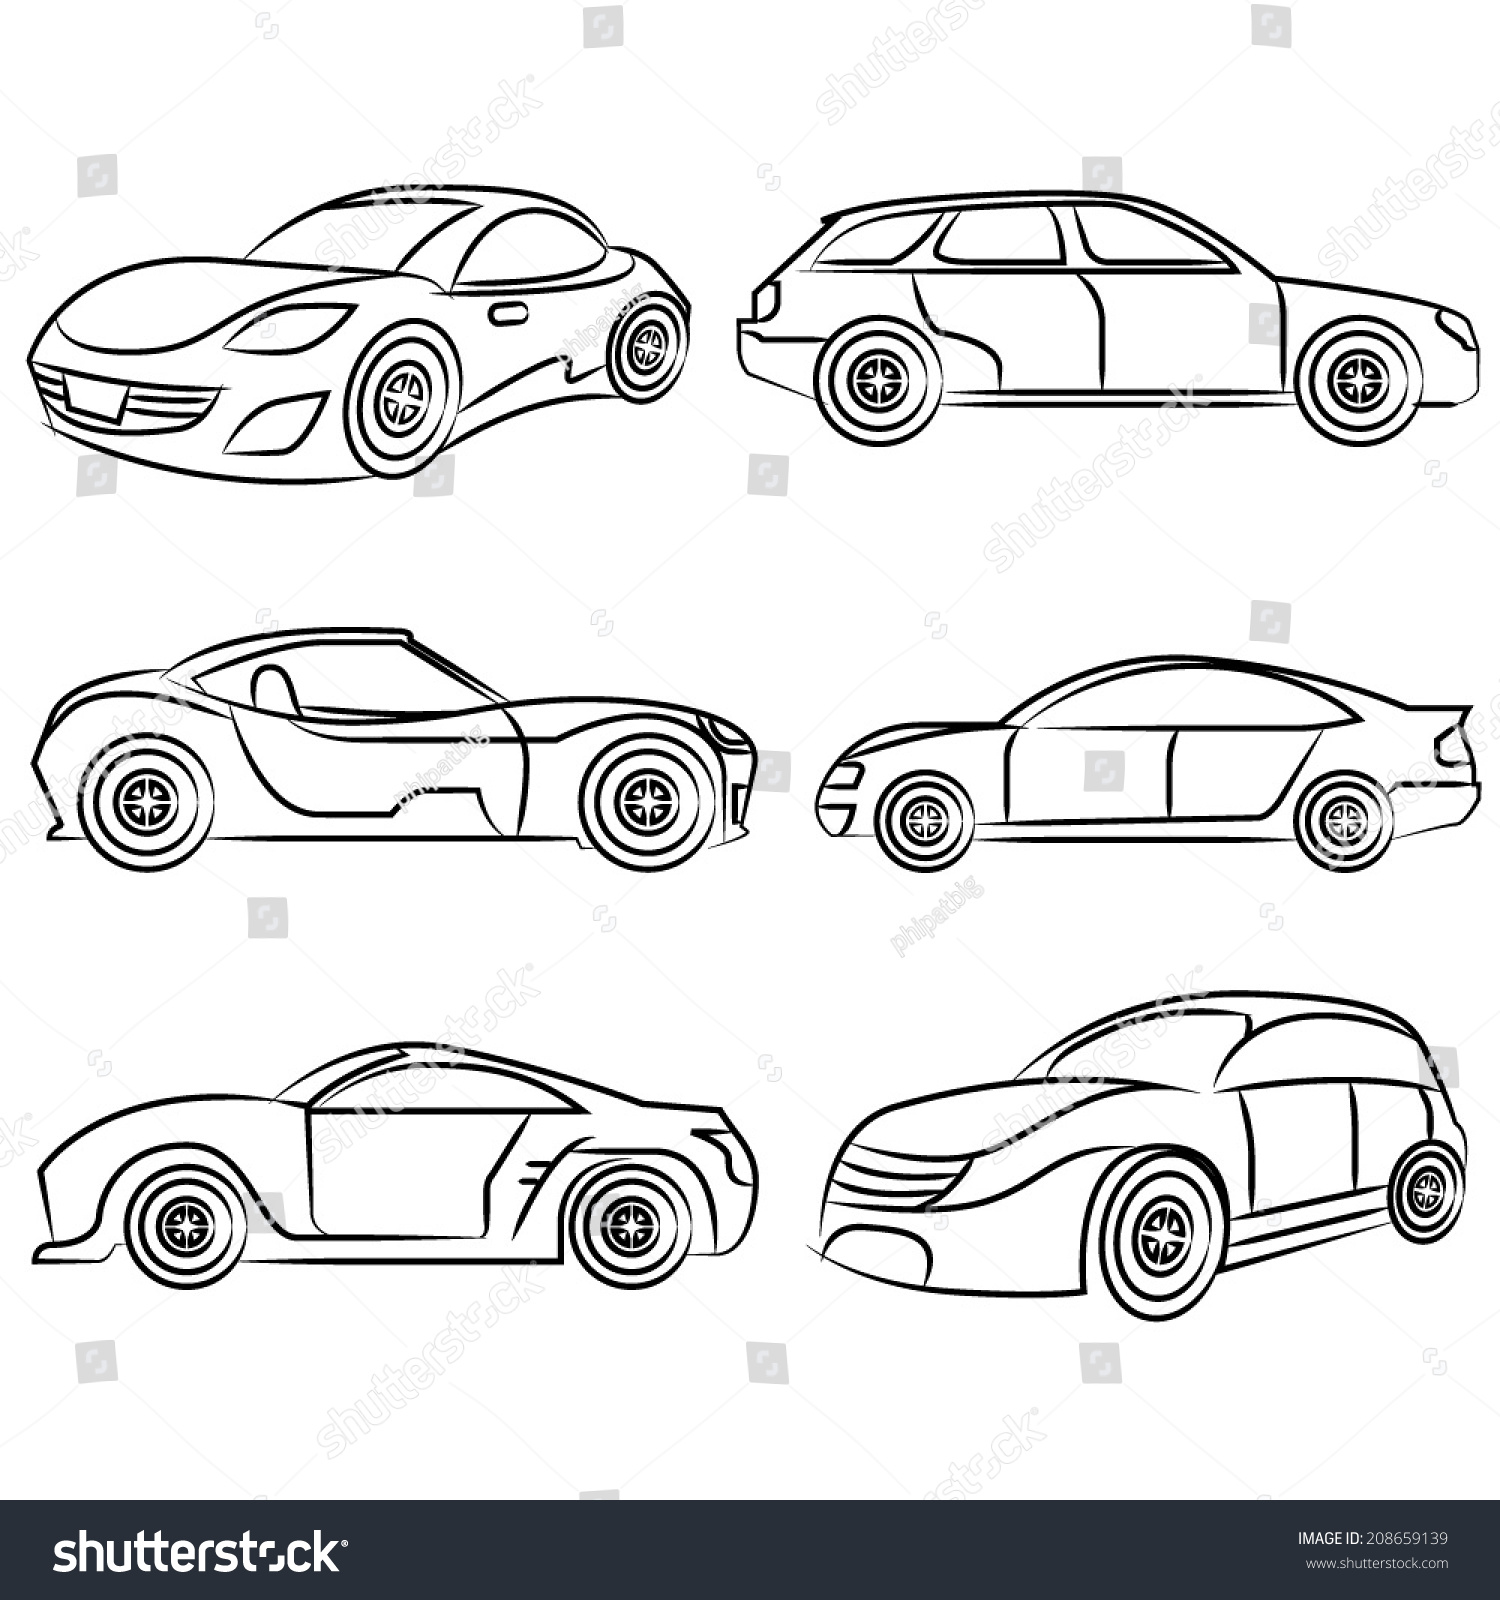 Sketch Car Set Stock Vector (Royalty Free) 208659139 | Shutterstock